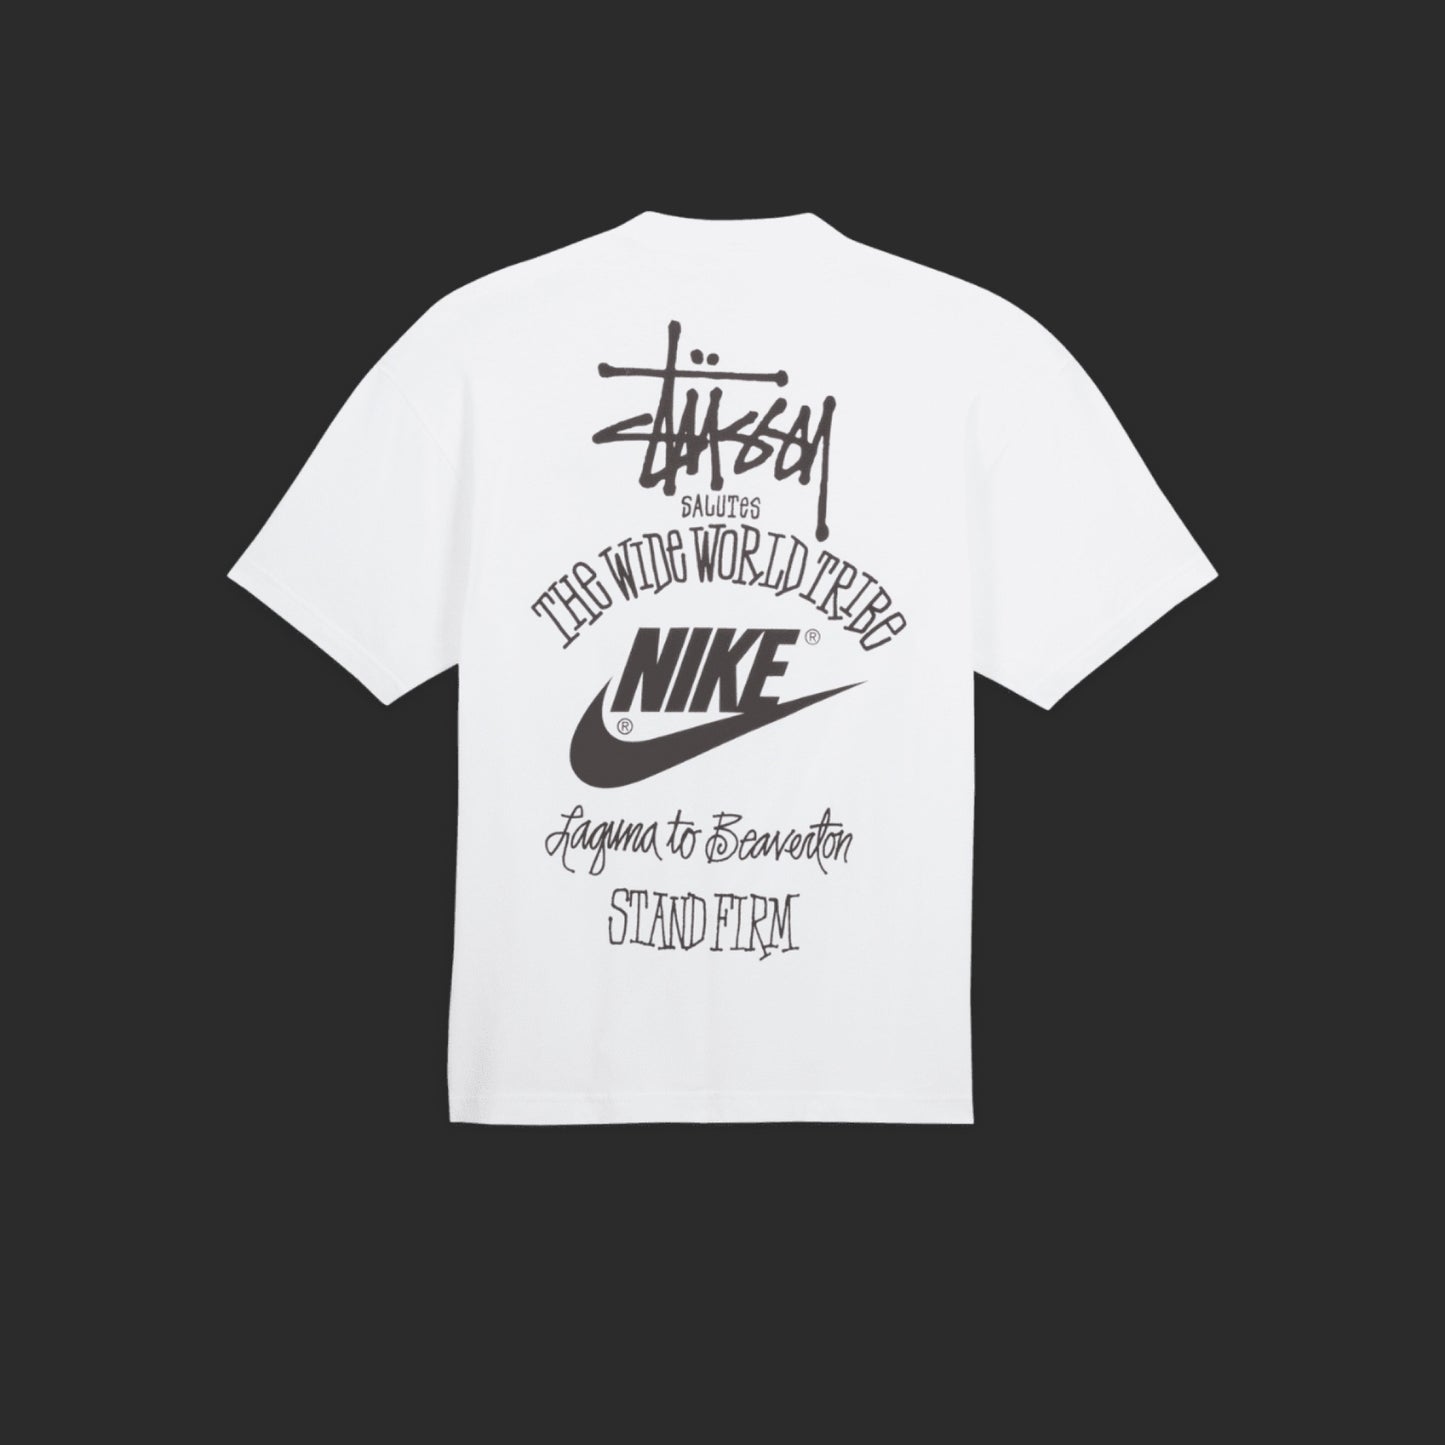 Stussy x Nike “The Wide World Tribe” Shirt